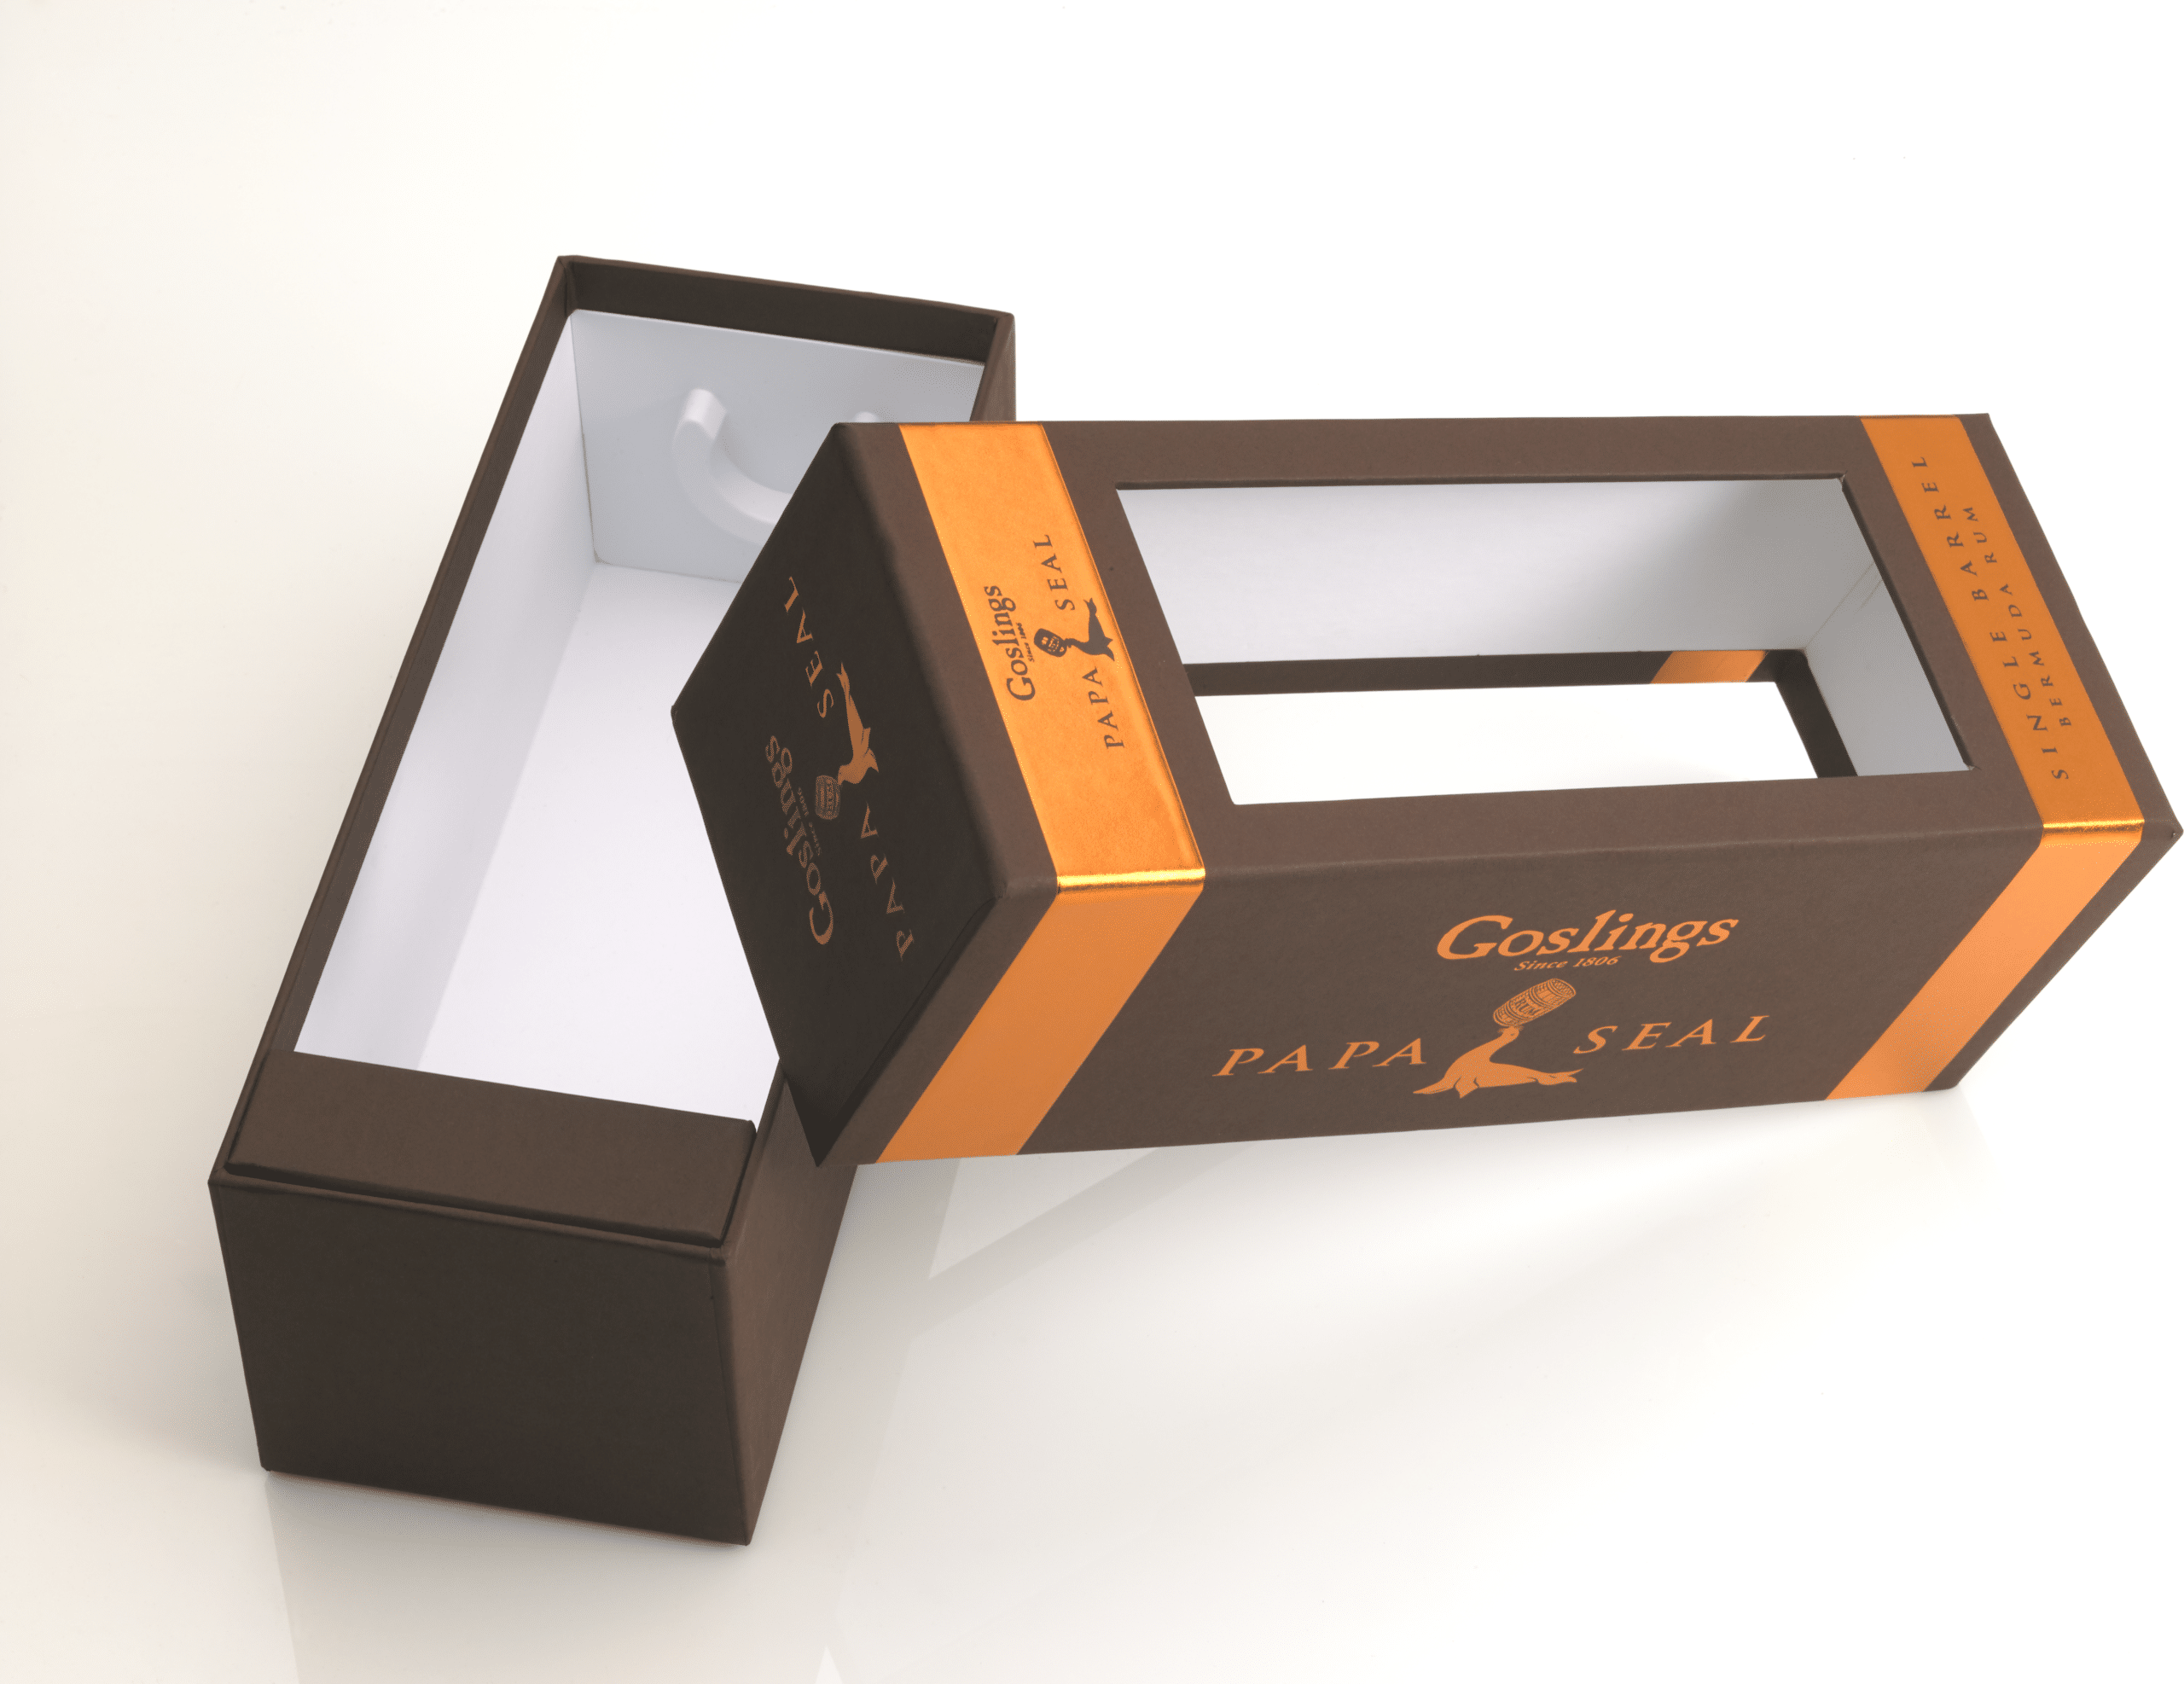 limited edition box, box of the month, Pusterla US, packaging design, liquor packaging, liquor box, custom packaging, rigid box, goslings papa seal, goslings rum